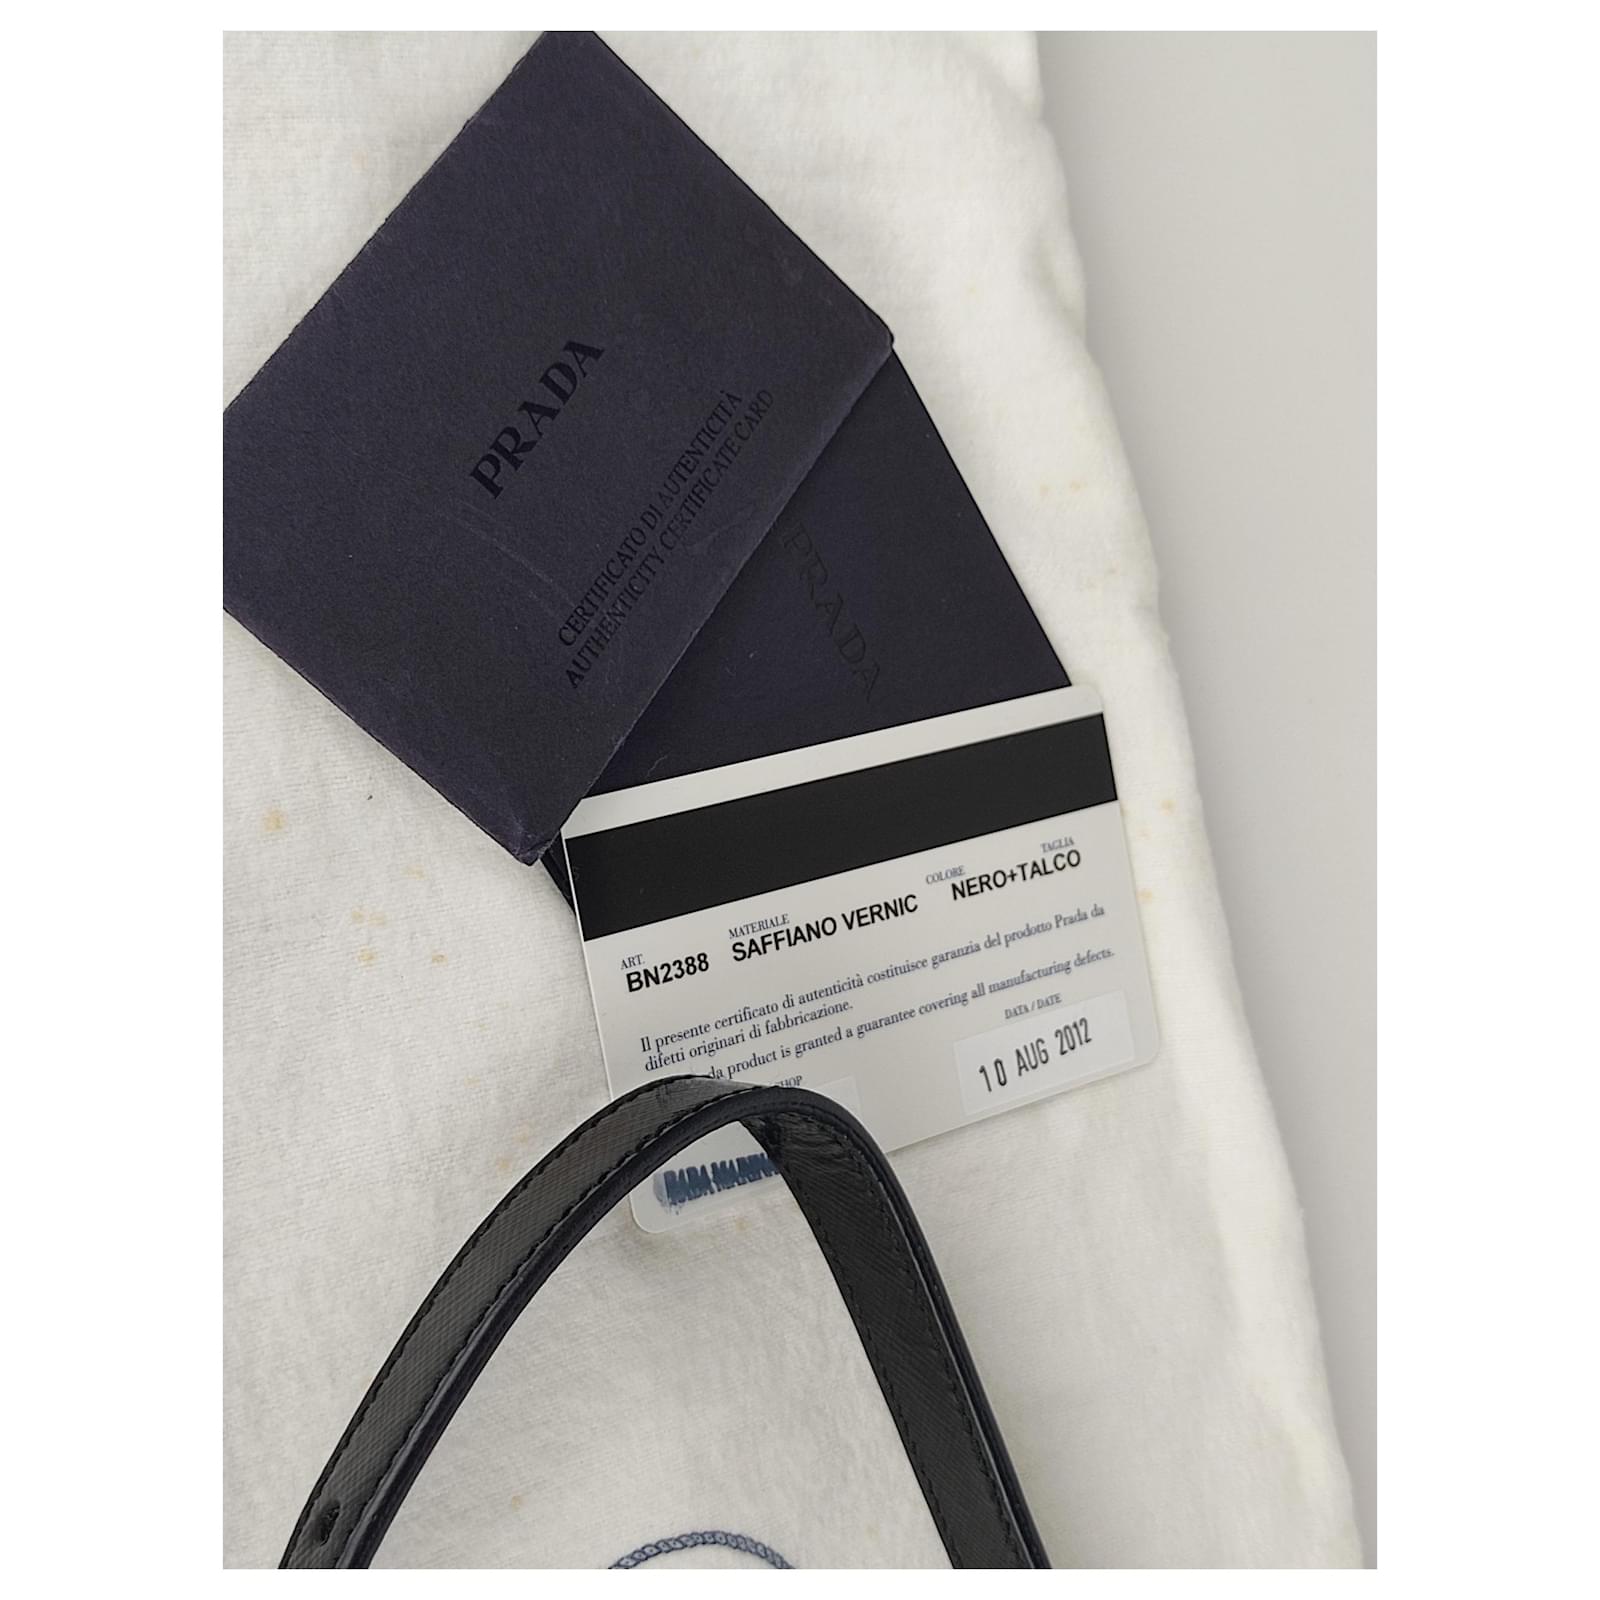 Prada Saffiano bag 2012 With shoulder strap Black Patent leather